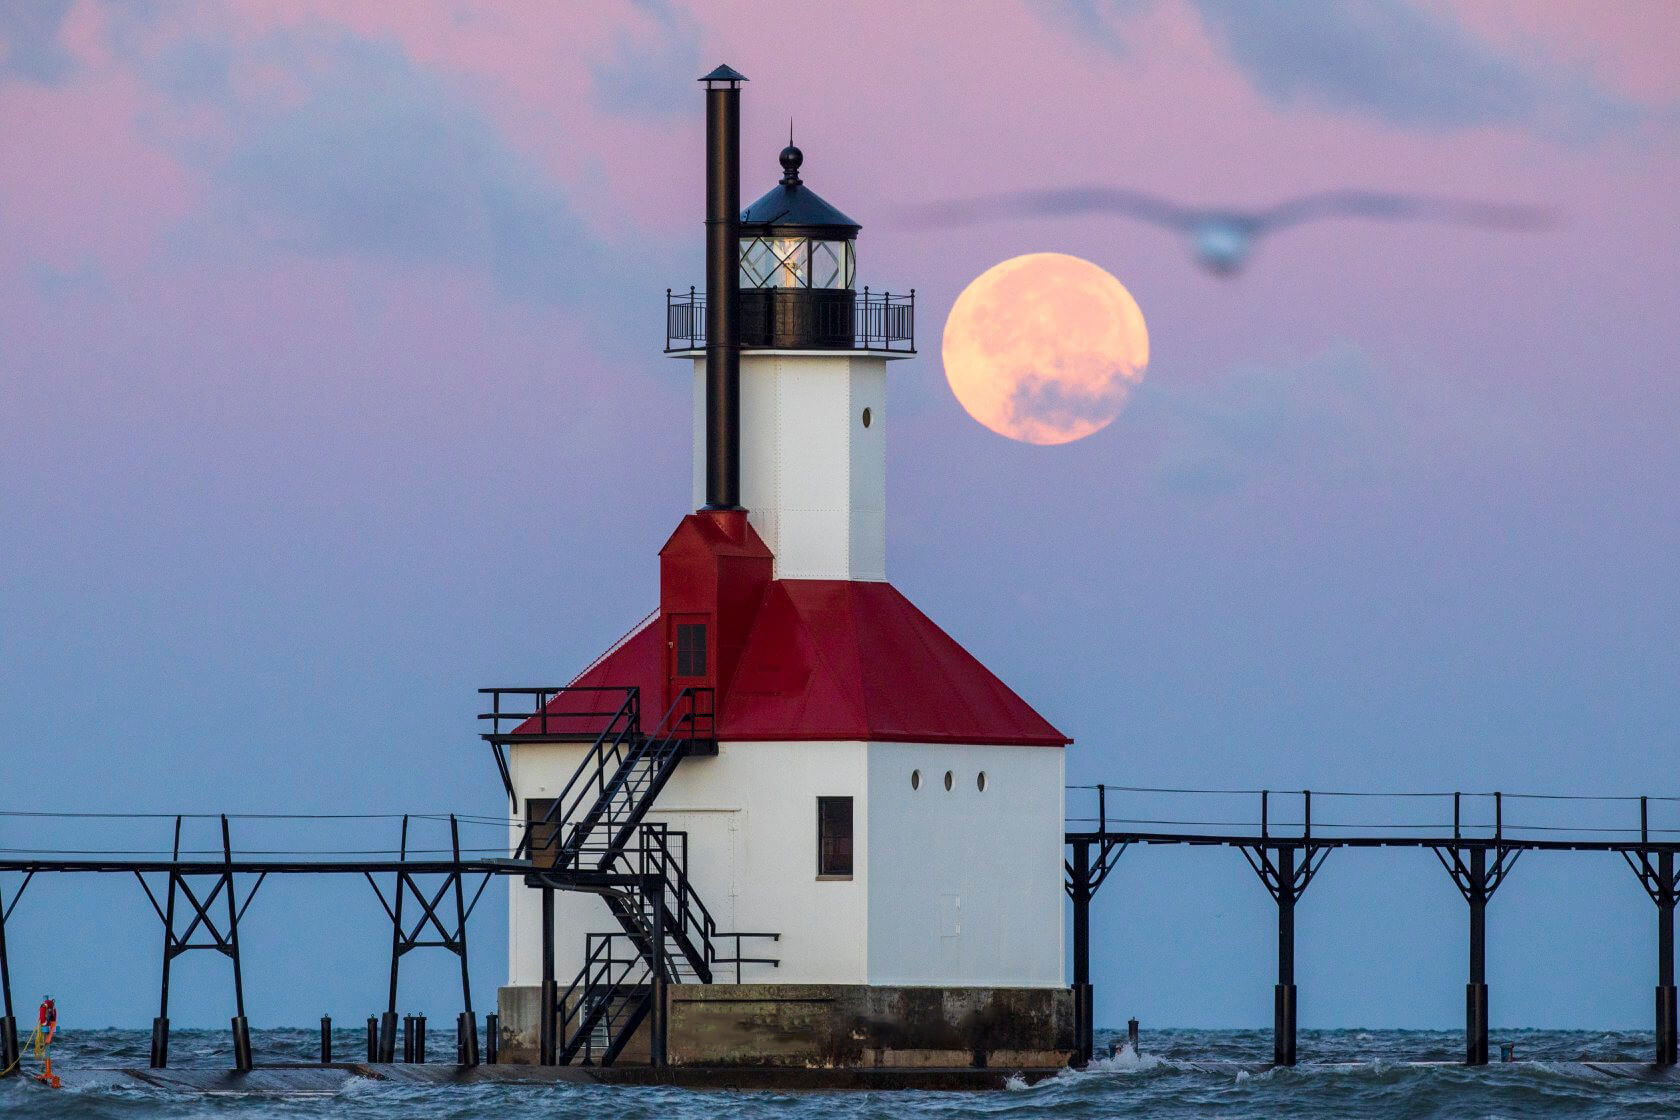 Moon & Lighthouse photo by Joshua Nowicki